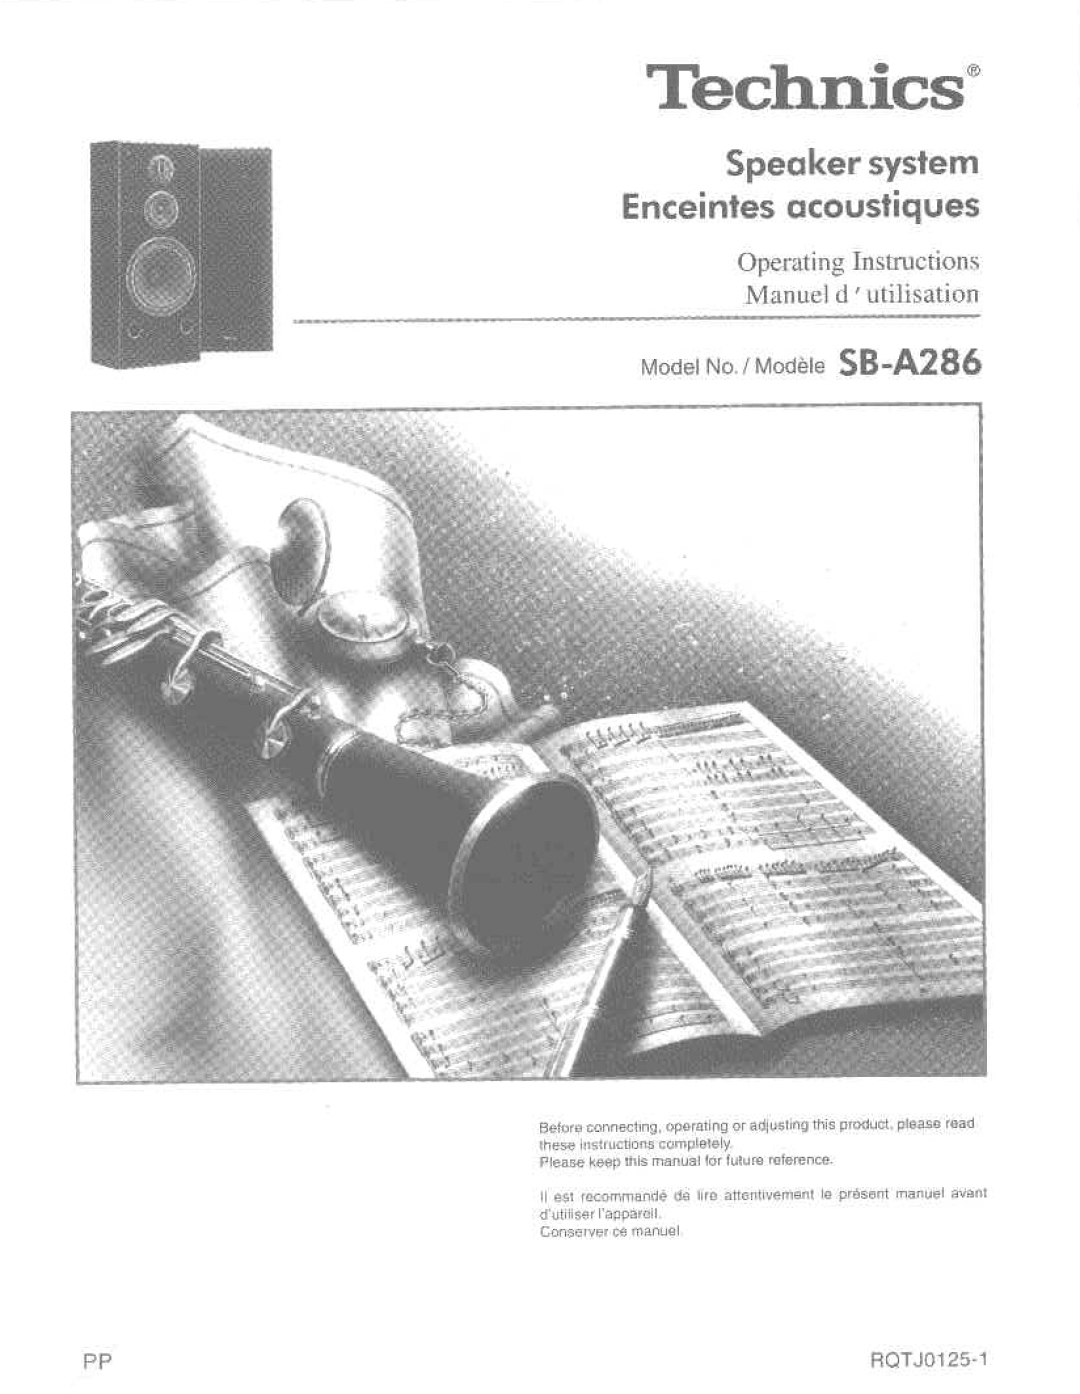 Panasonic SB-A286 manual 